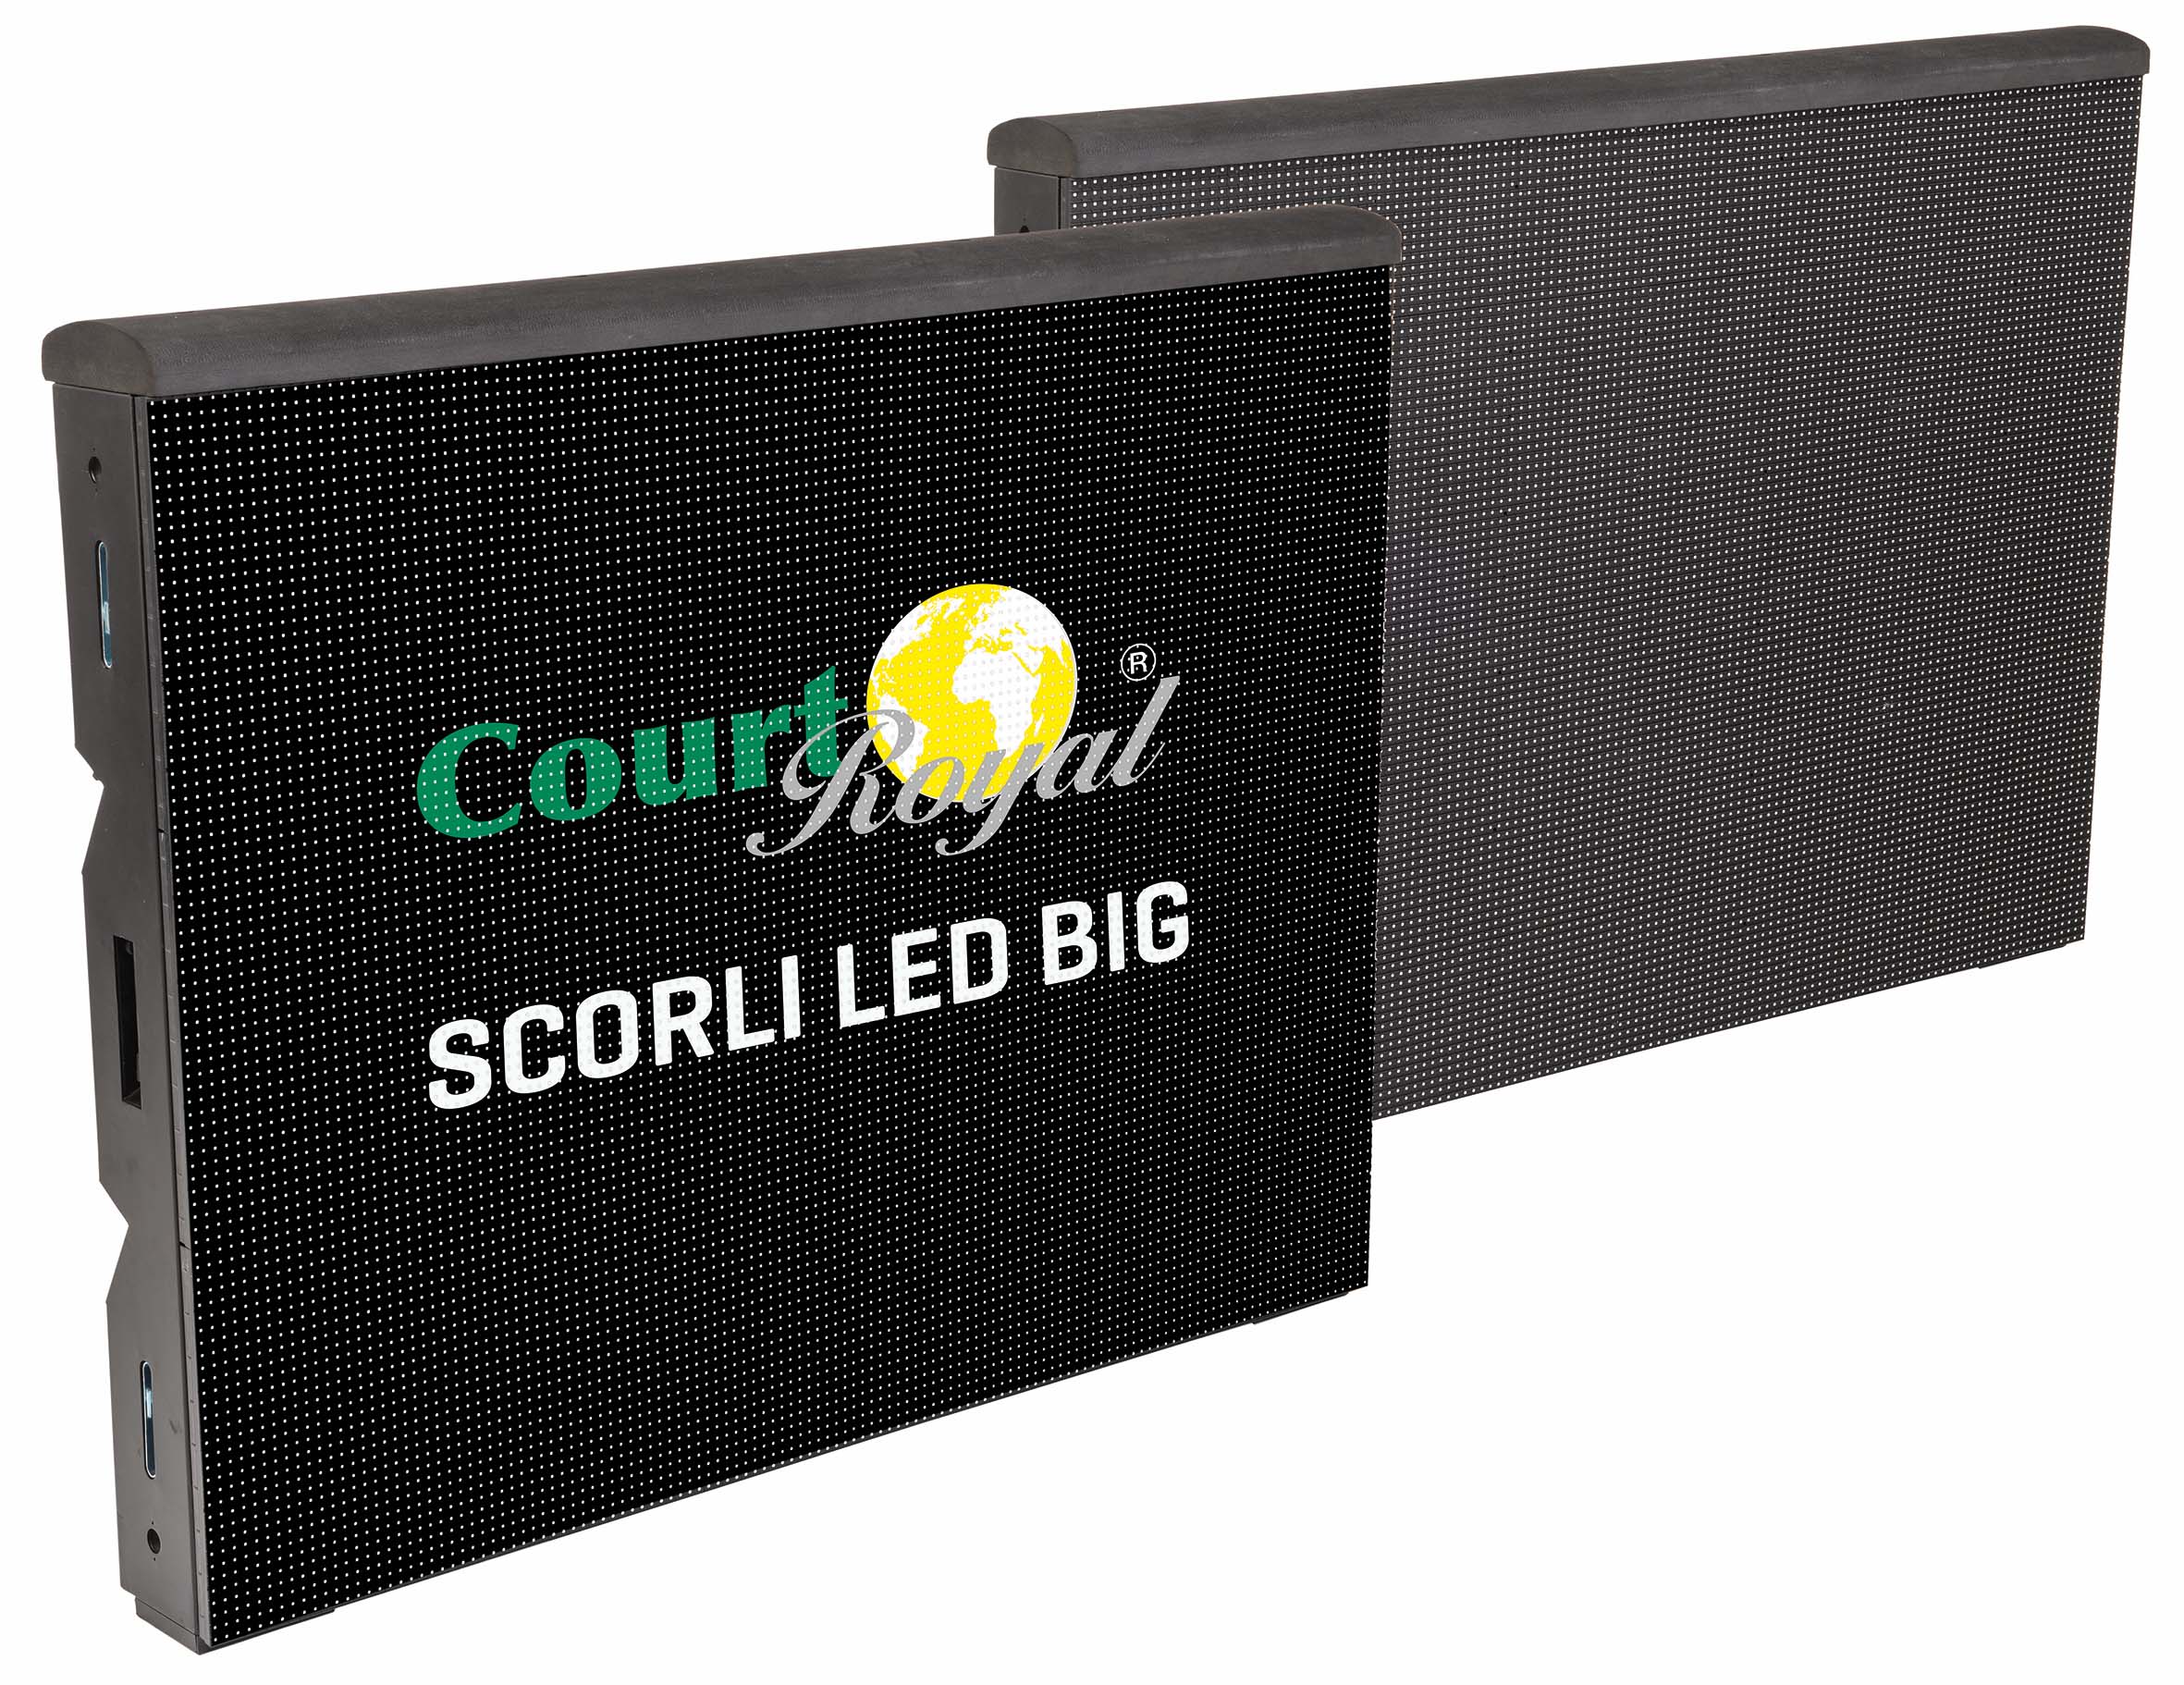 Scorli LED-Scoreboard BIG 128x96 cm